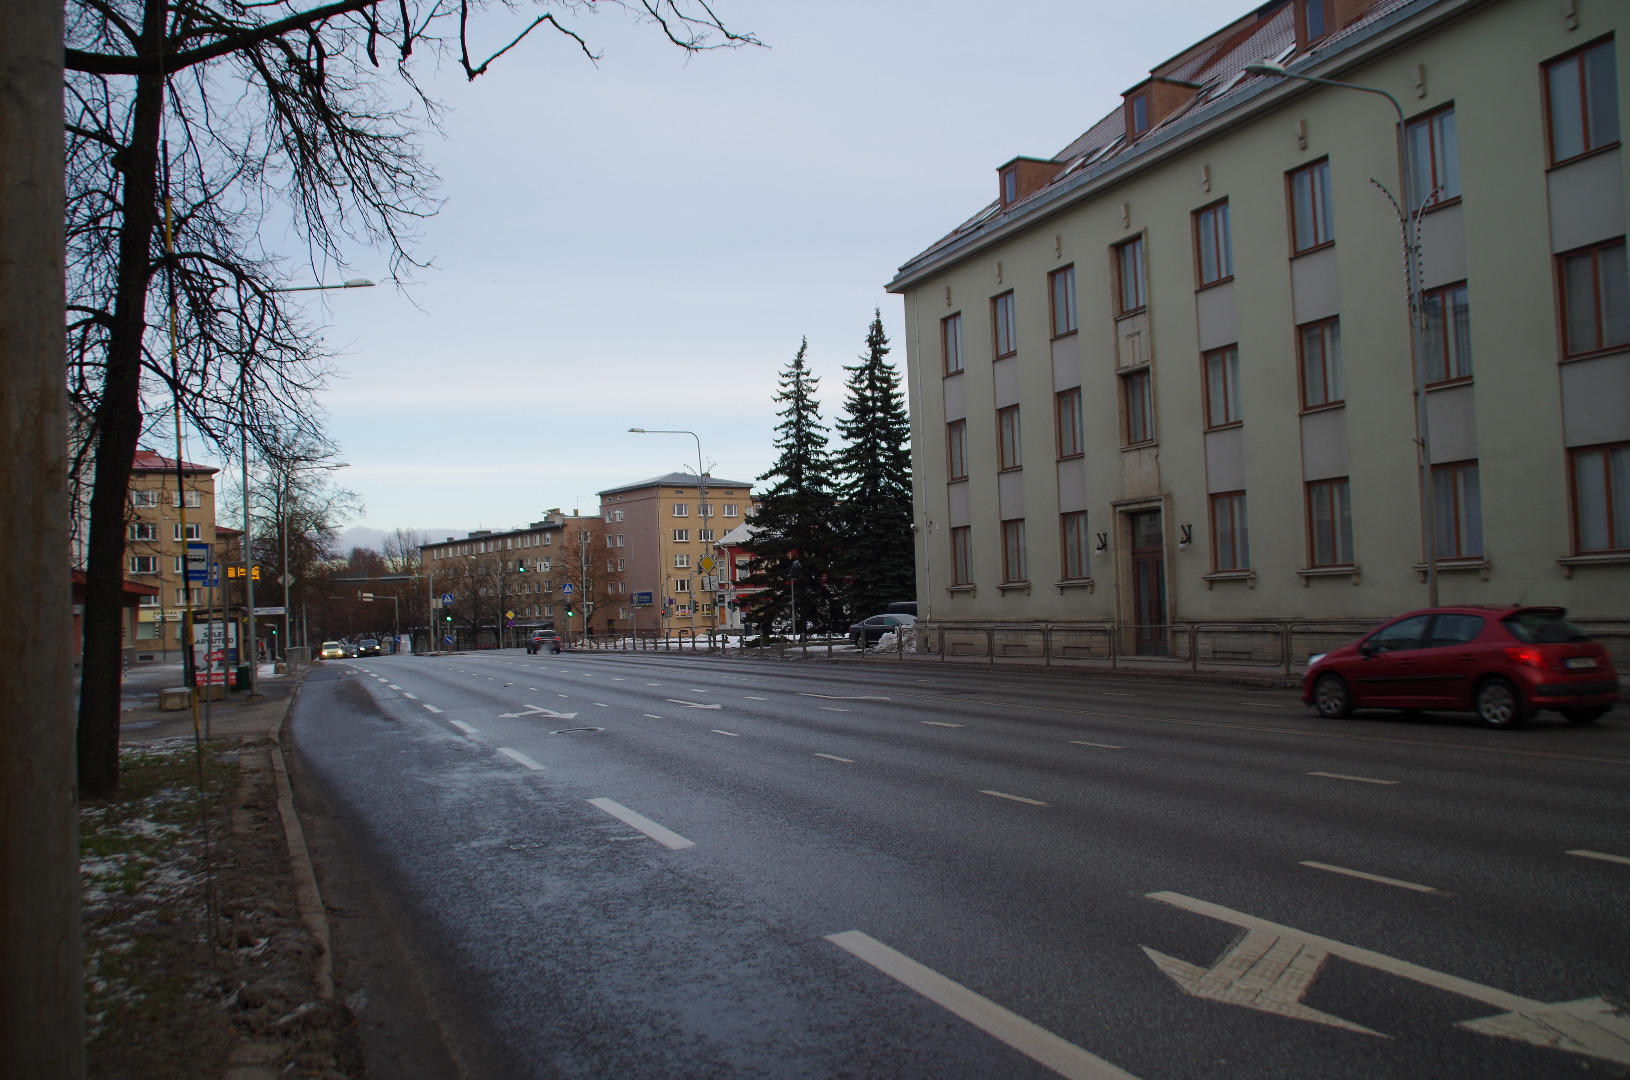 Tartu, roadworks in the Old Town. rephoto